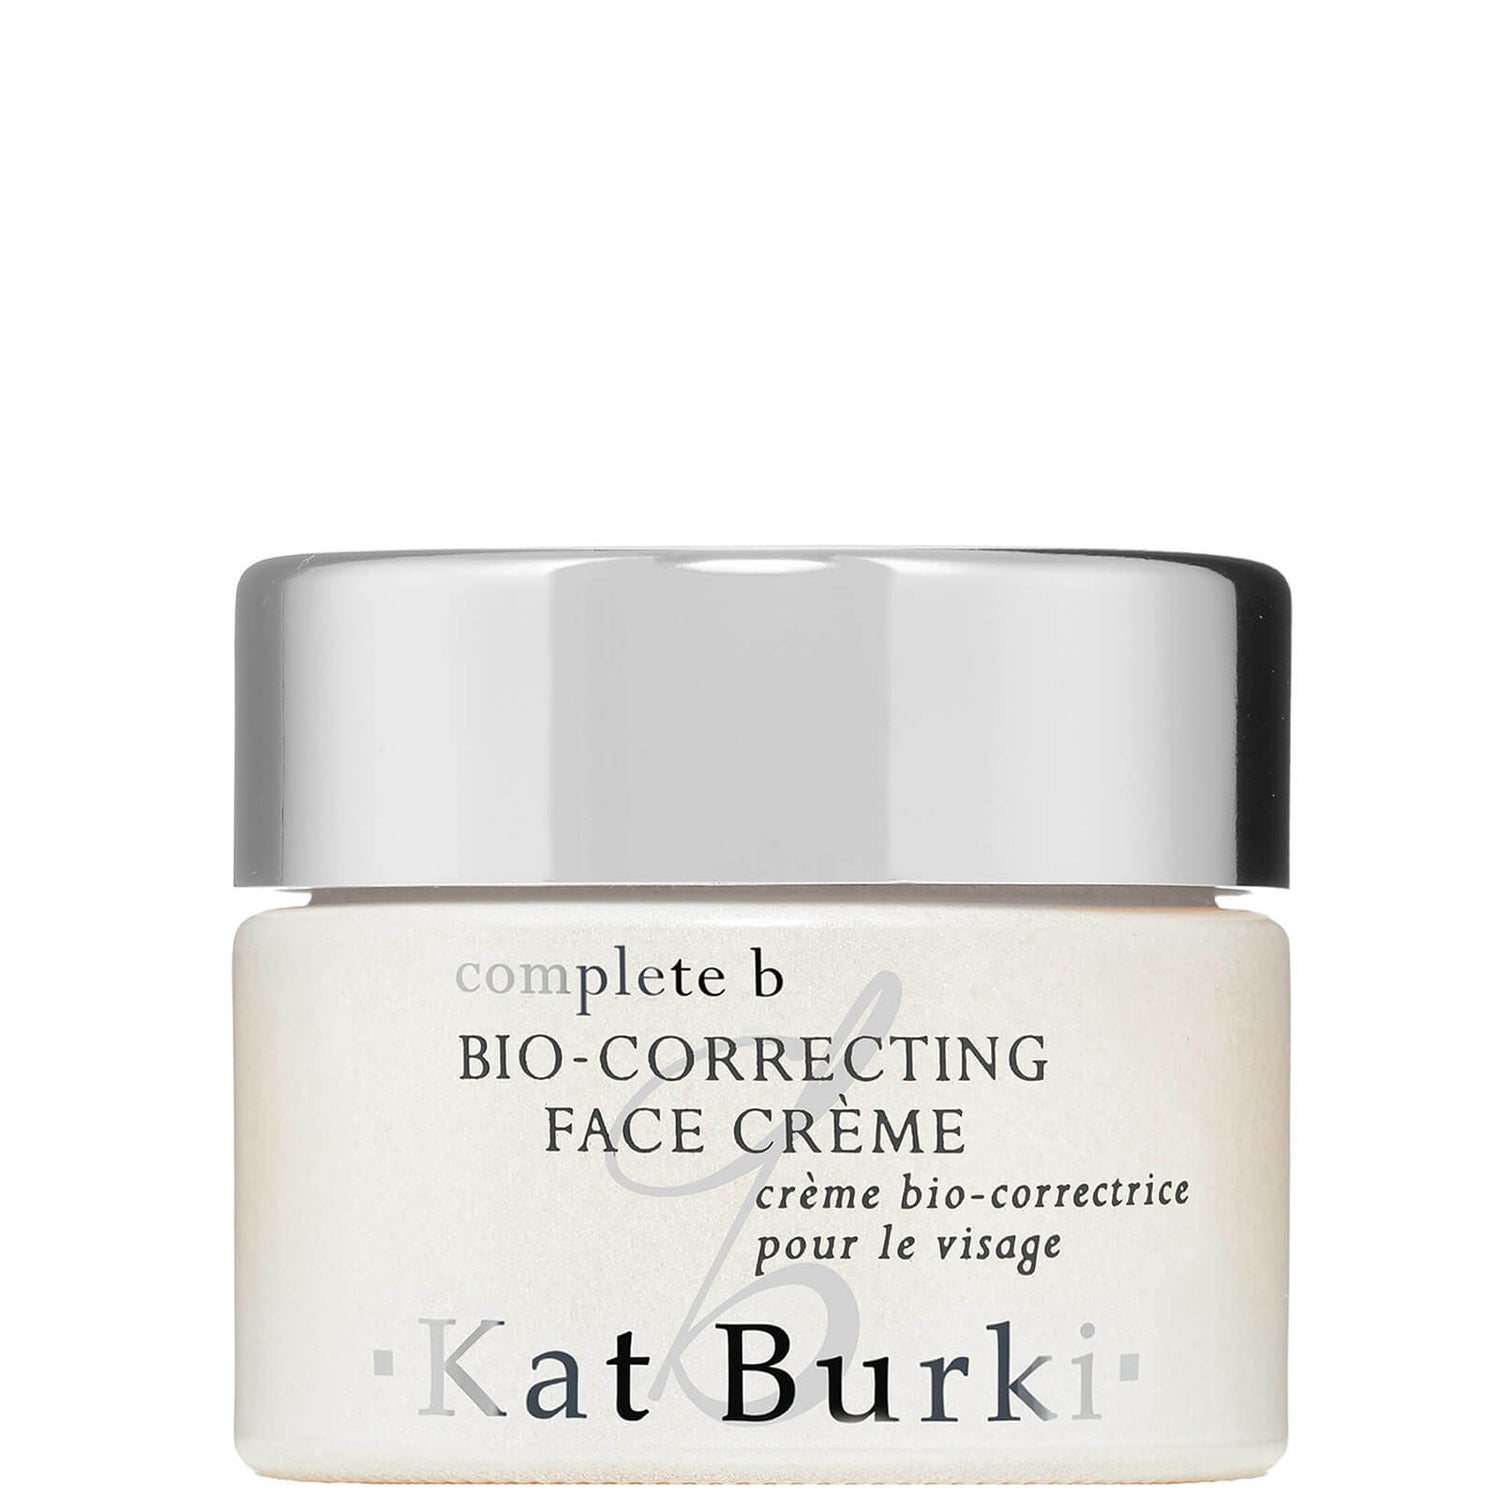 Kat Burki Complete B Bio-Correcting Face Crème 1.7oz